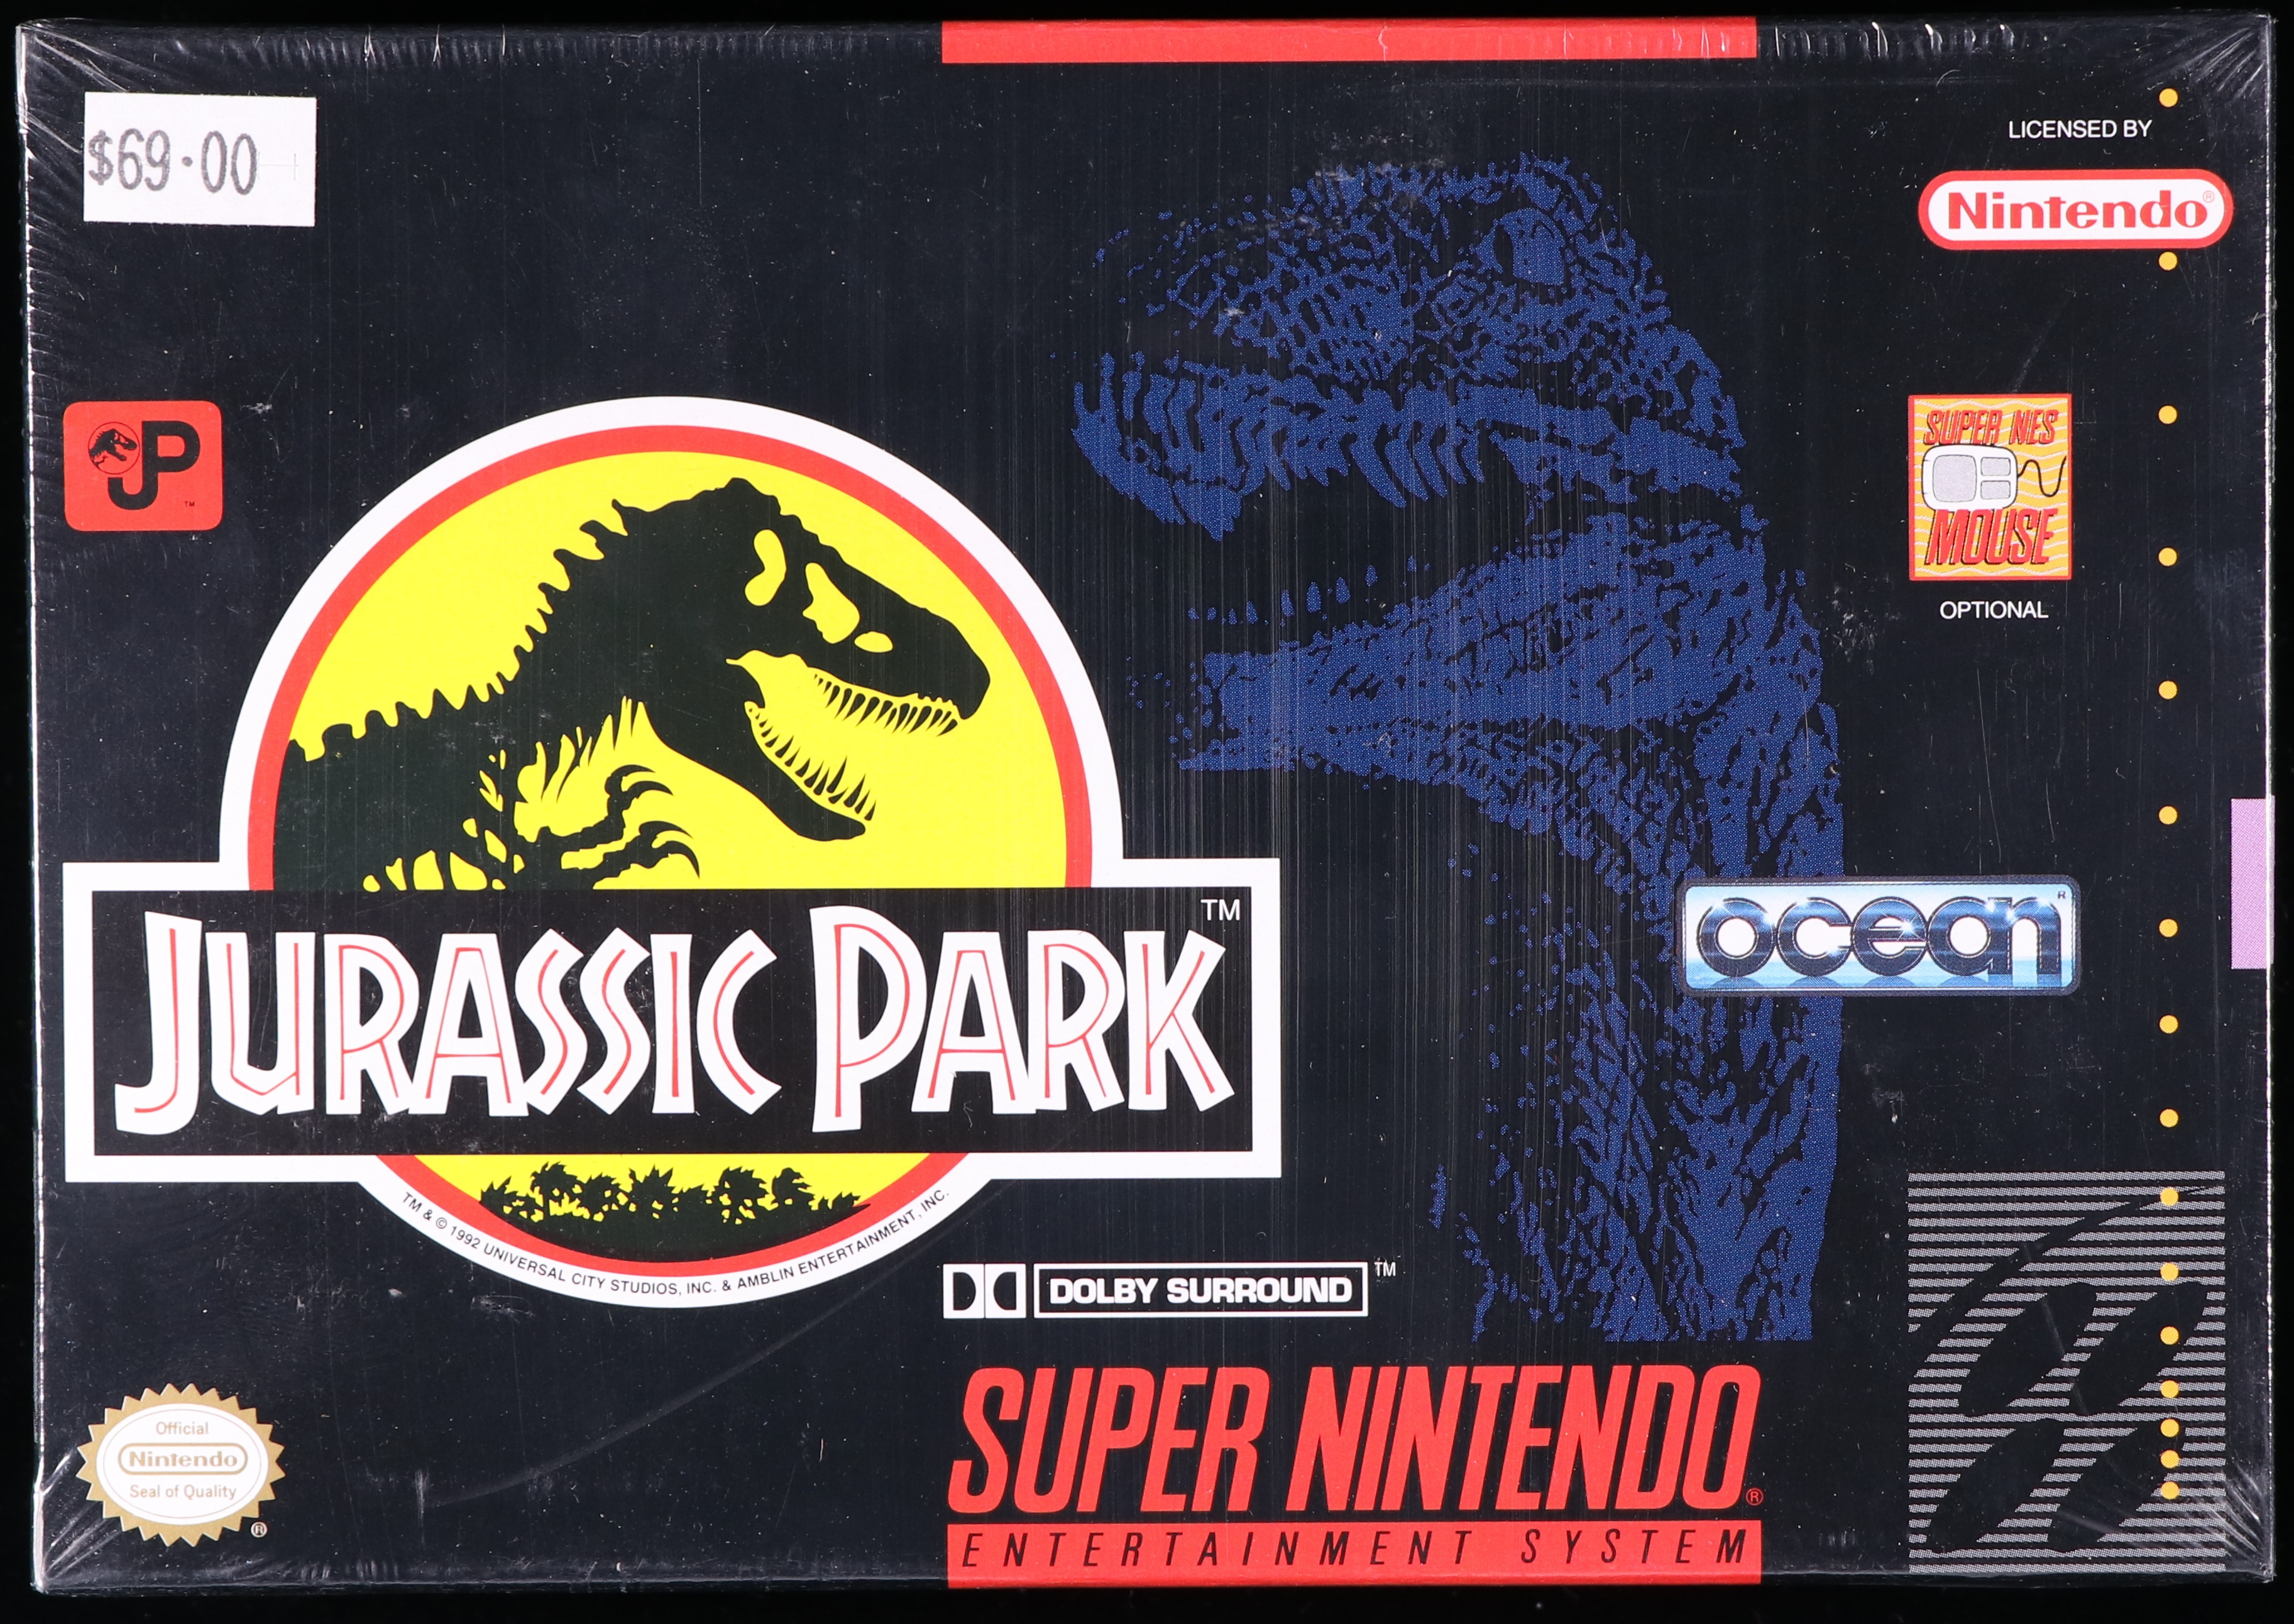 Jurassic Park SNES 9.8 A - NEBRASKA COLLECTION